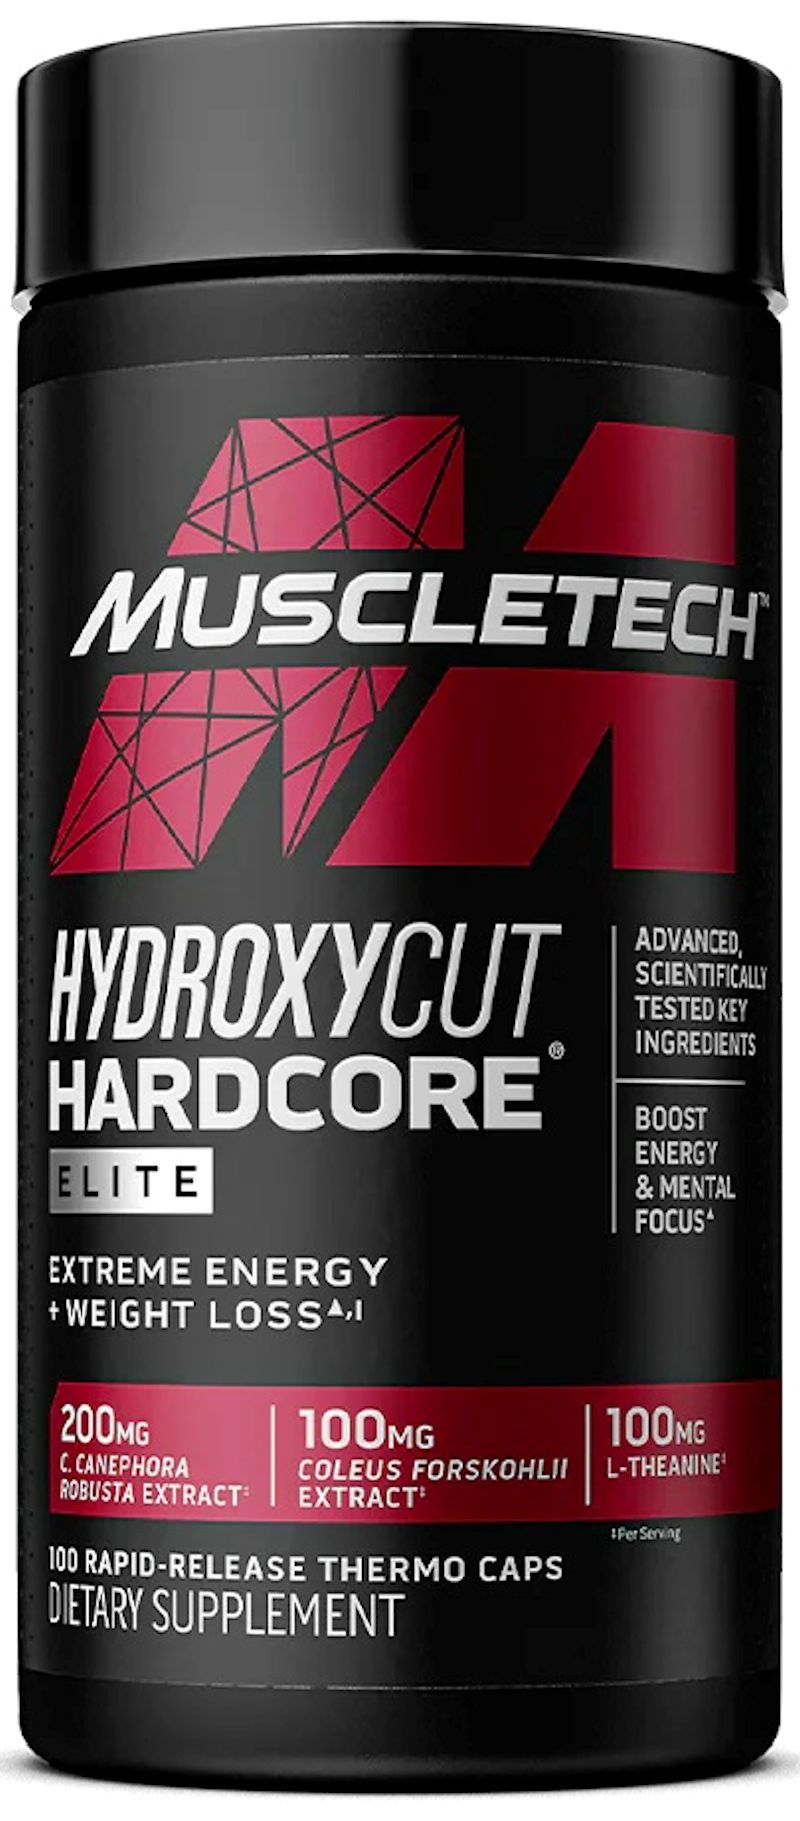 MuscleTech Hydroxycut Hardcore Elite 100 caps